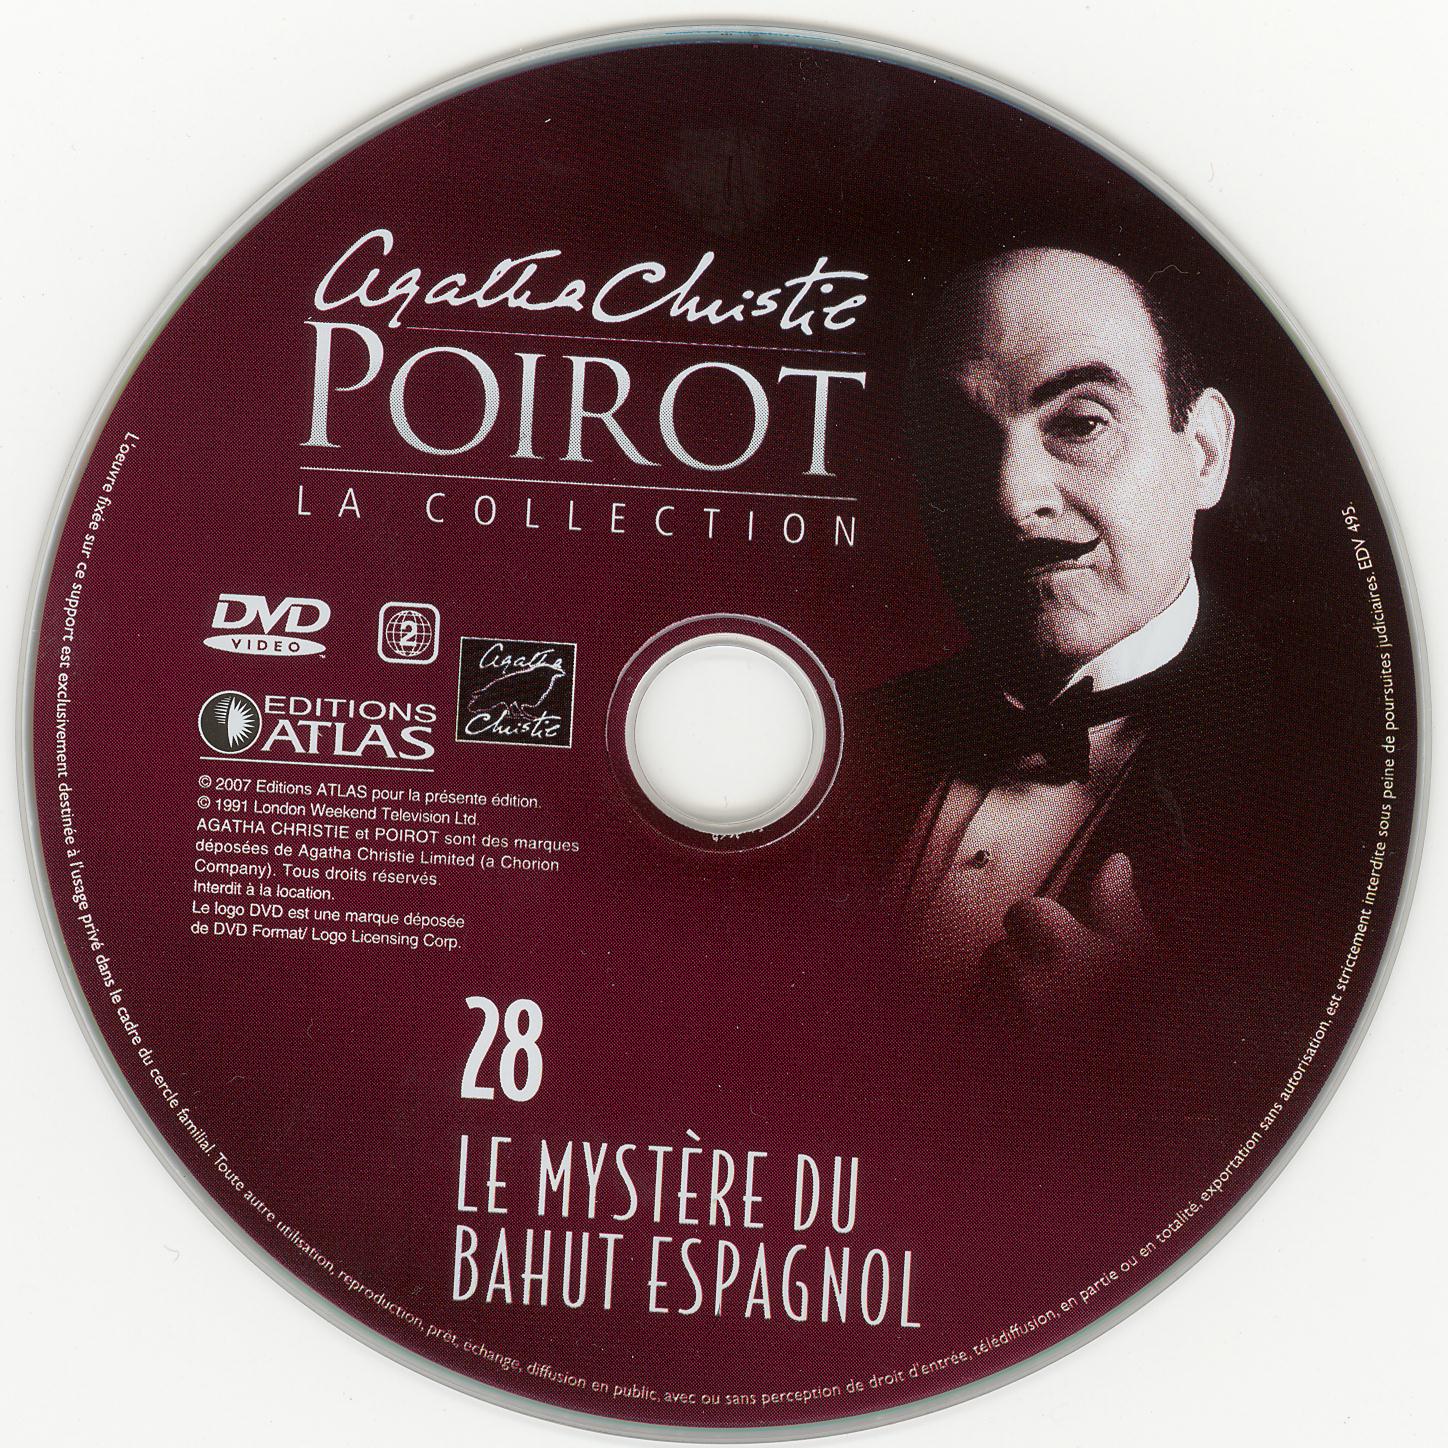 Hercule Poirot vol 28